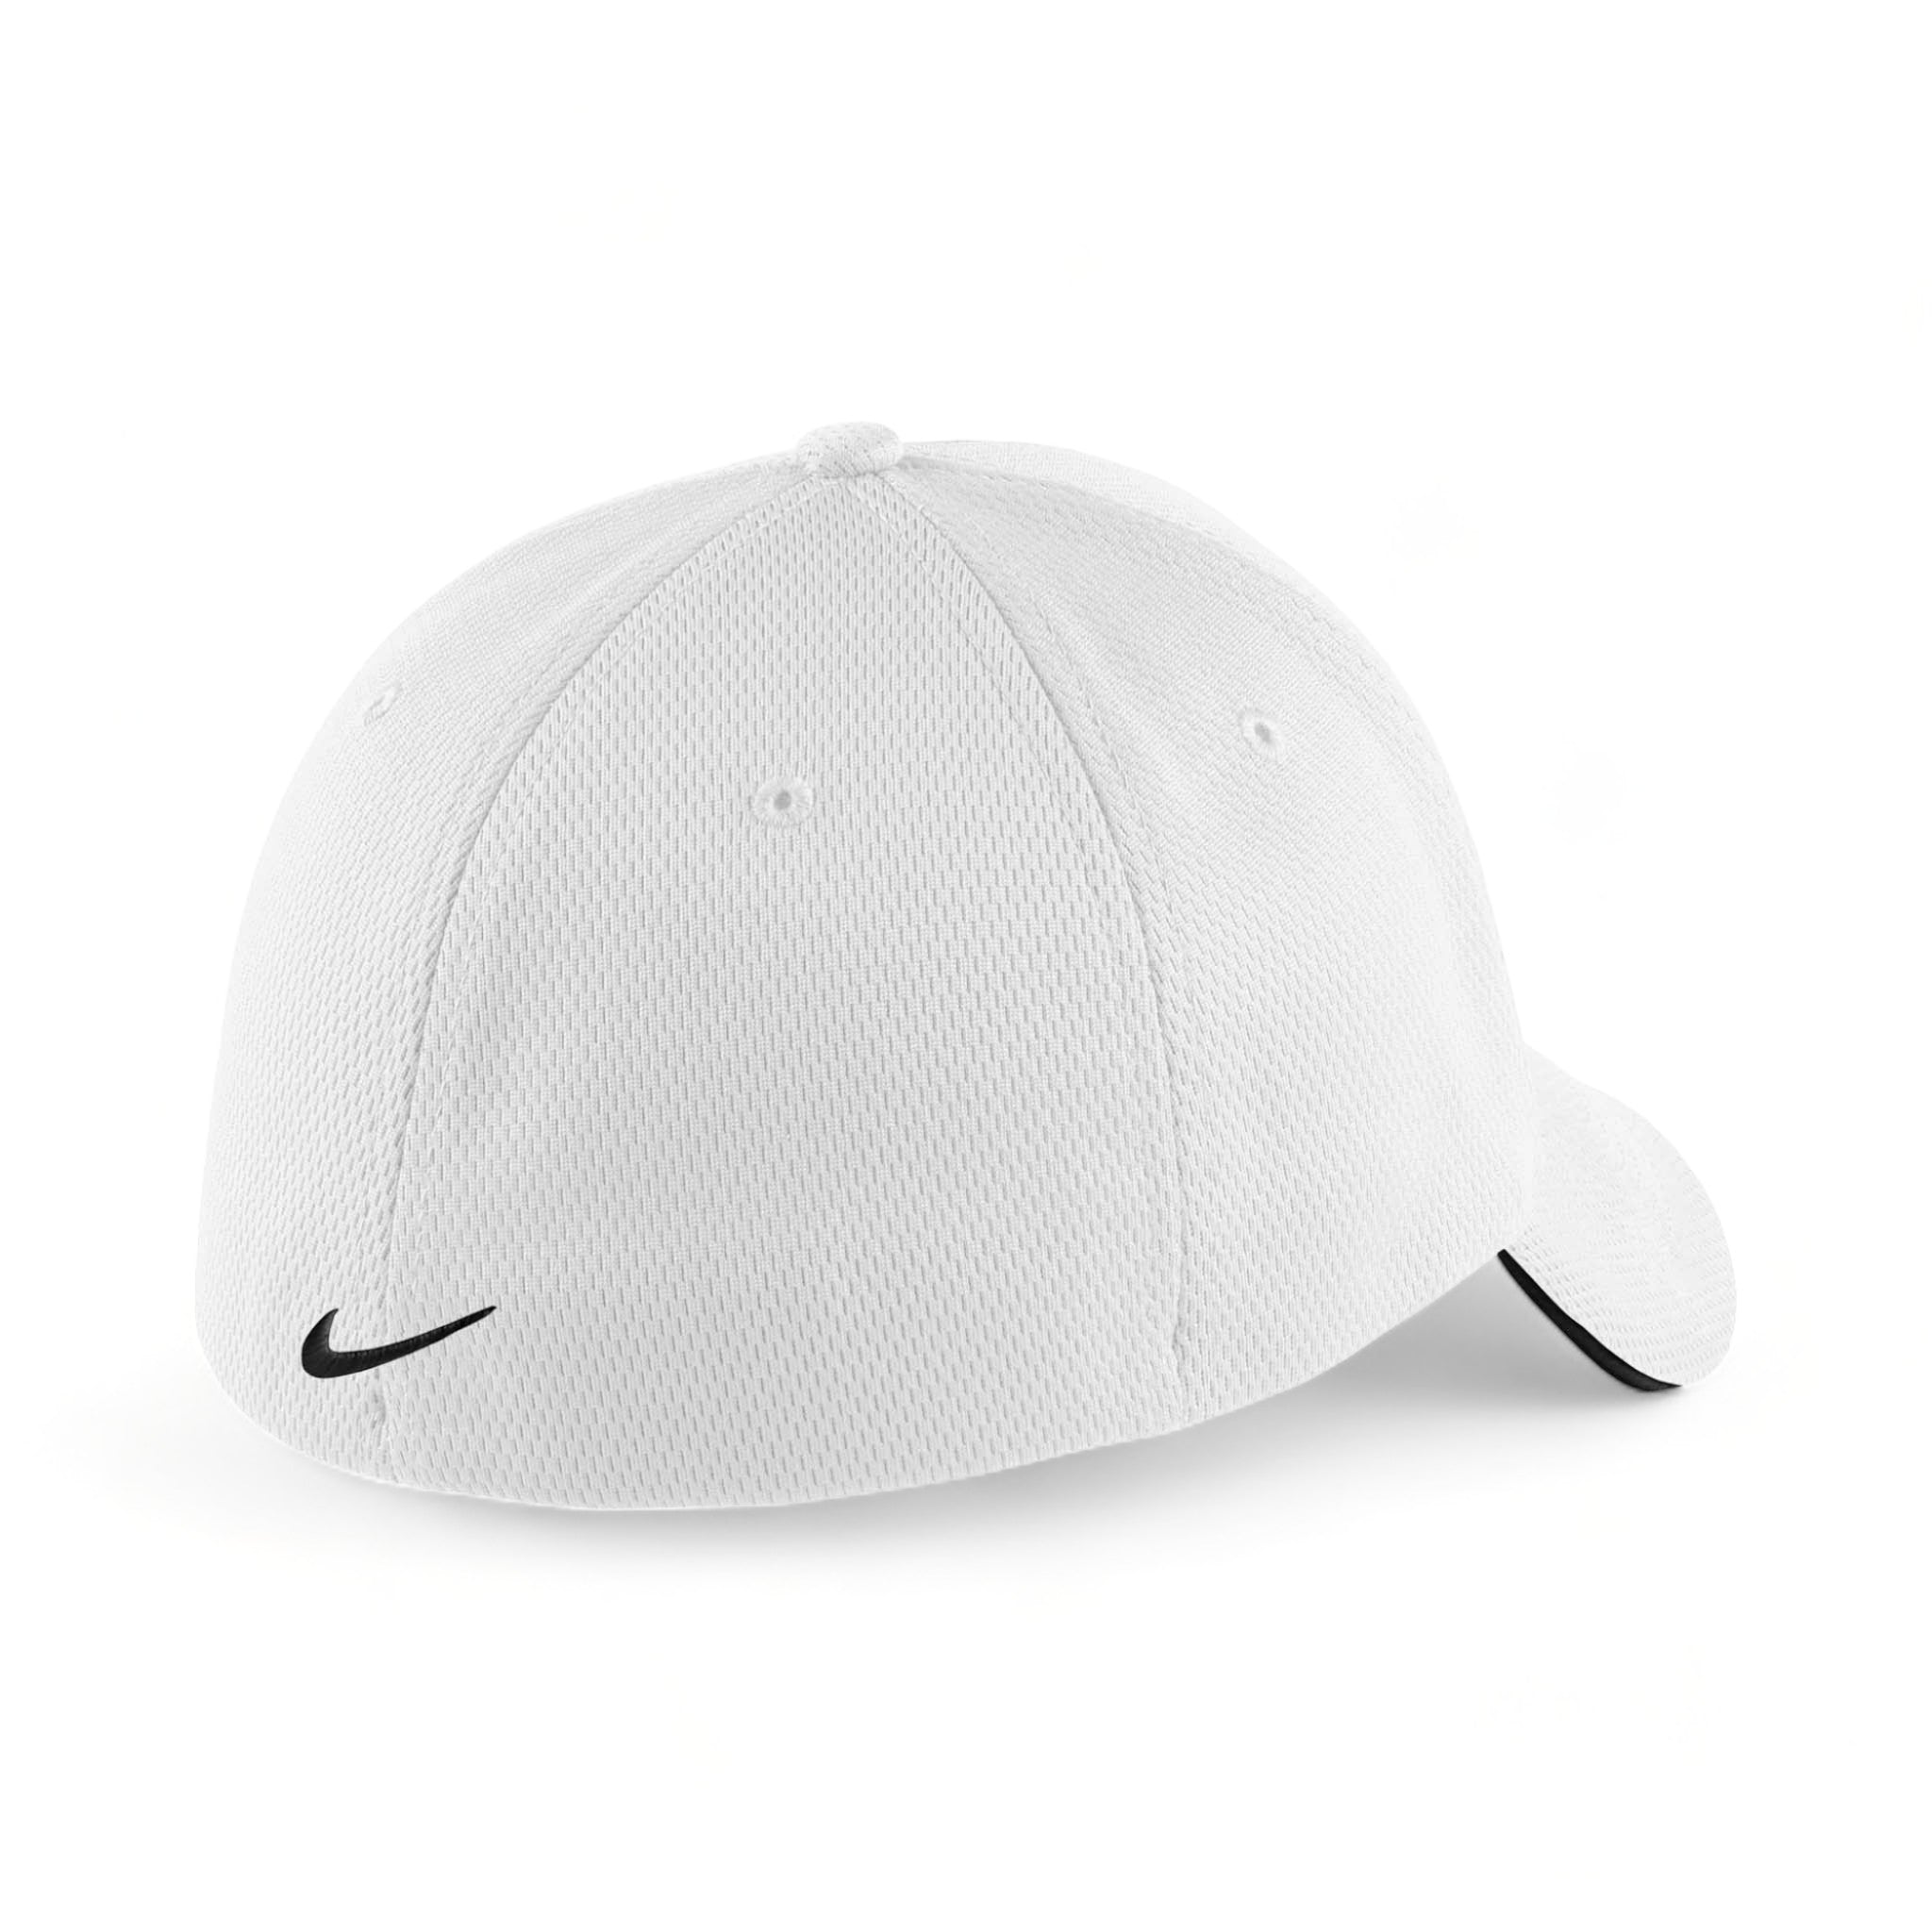 Back view of Nike NKFD9718 custom hat in white and black